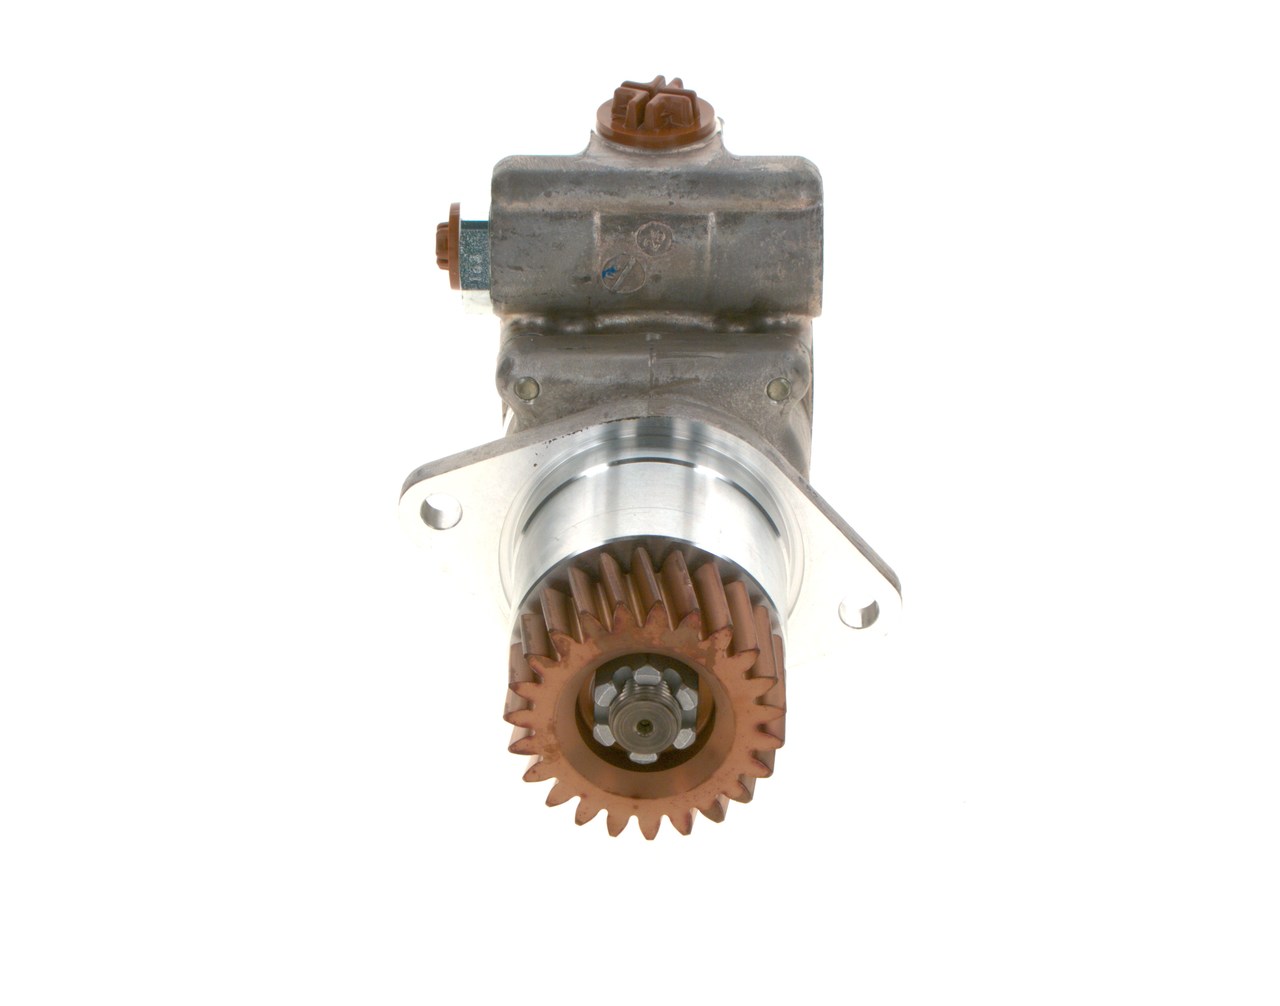 BOSCH K S01 000 364 Power steering pump Hydraulic, 180 bar, M 26 x 1,5, Vane Pump, Clockwise rotation